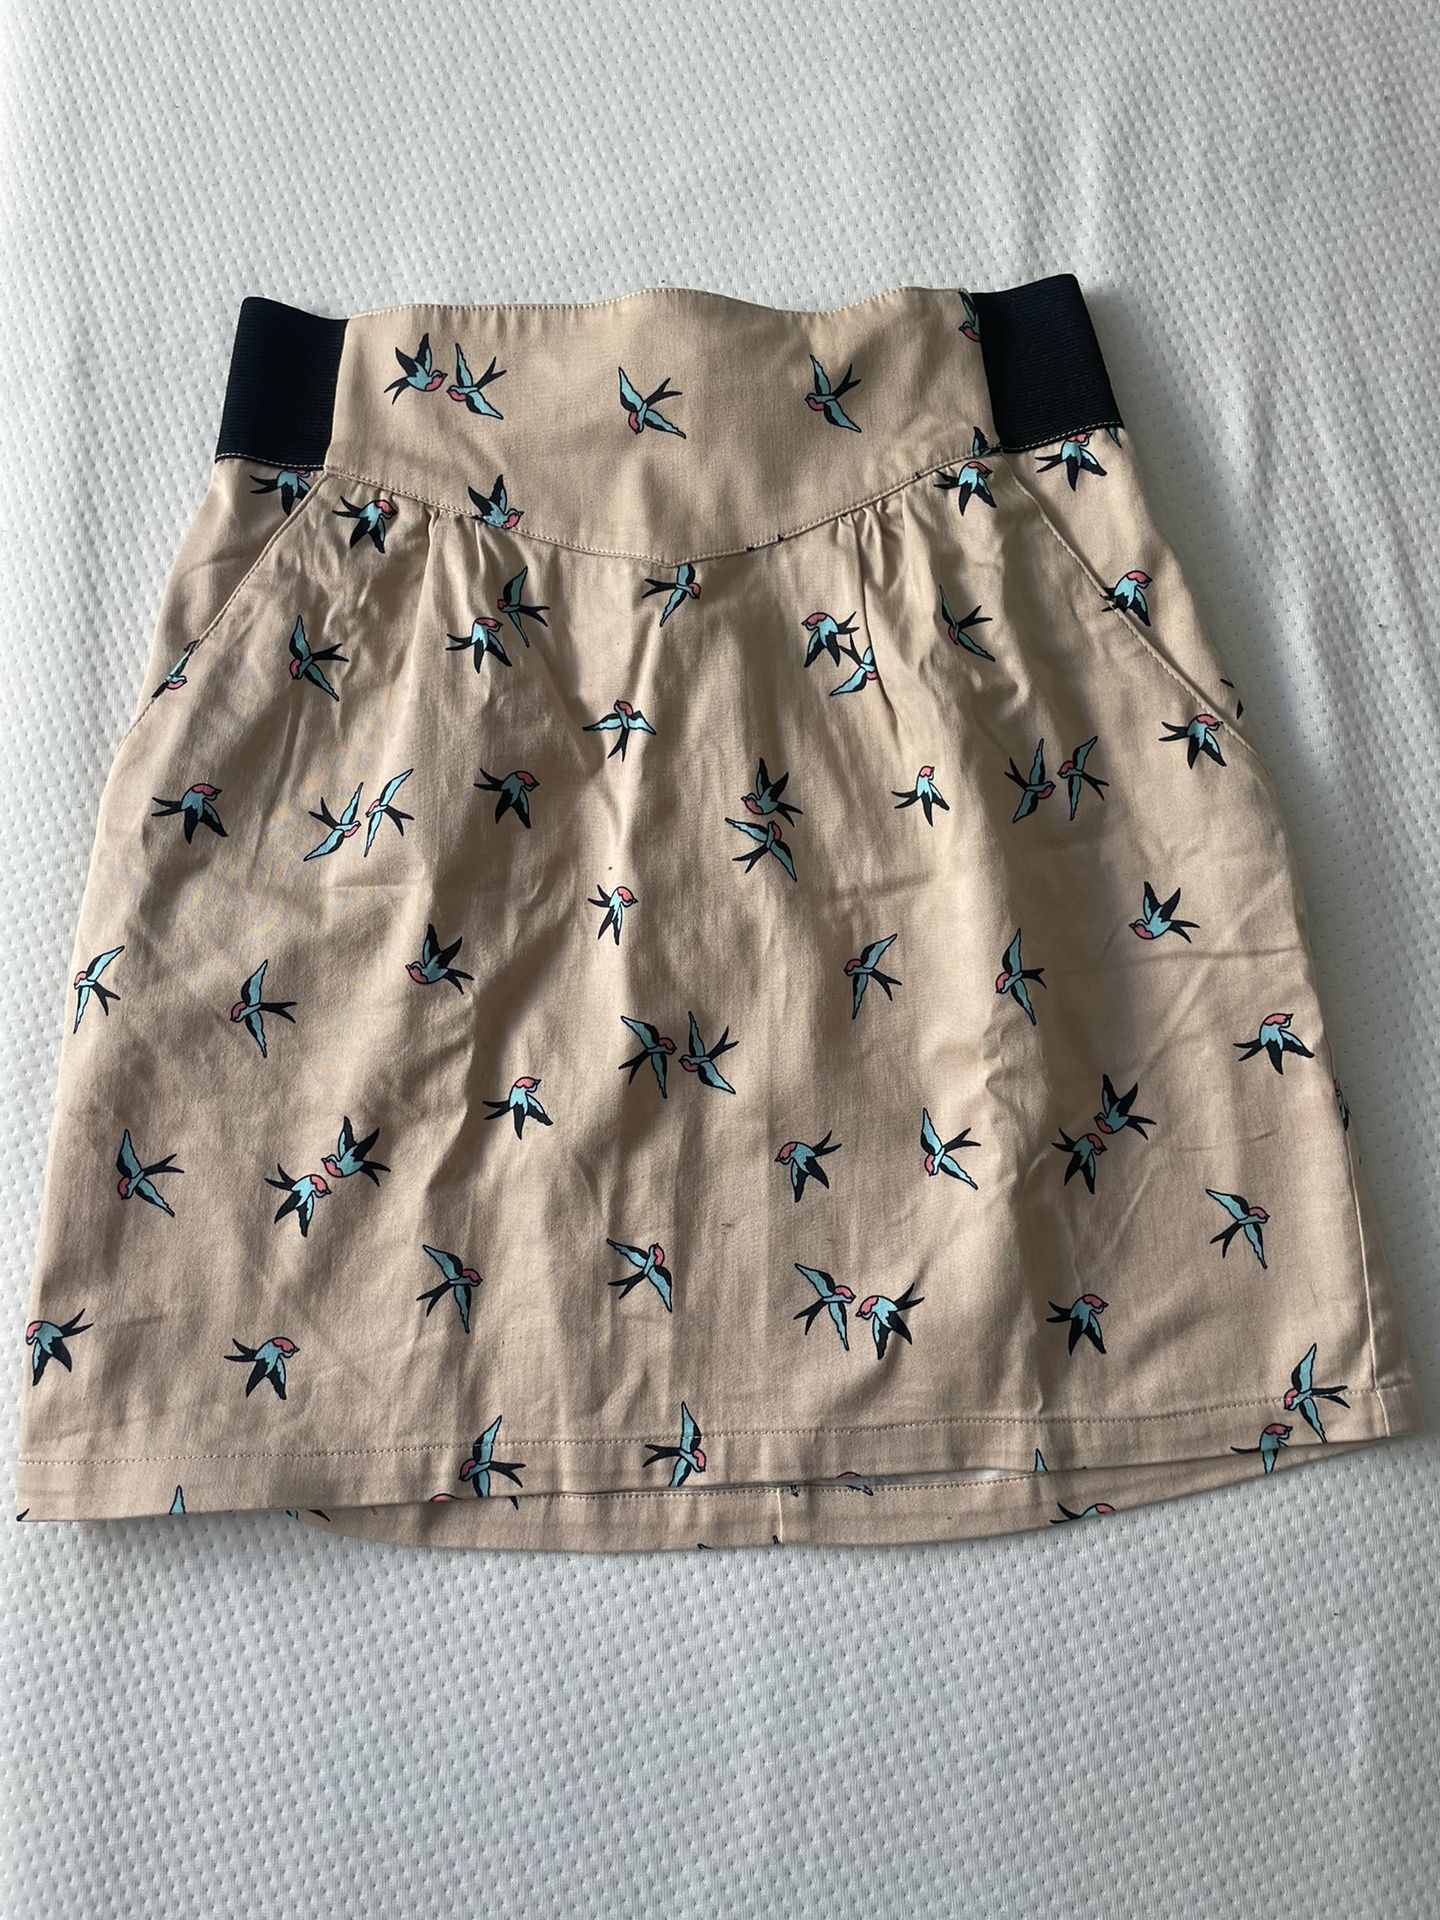 Mini Pencil Skirt Size 6 Or ER 36